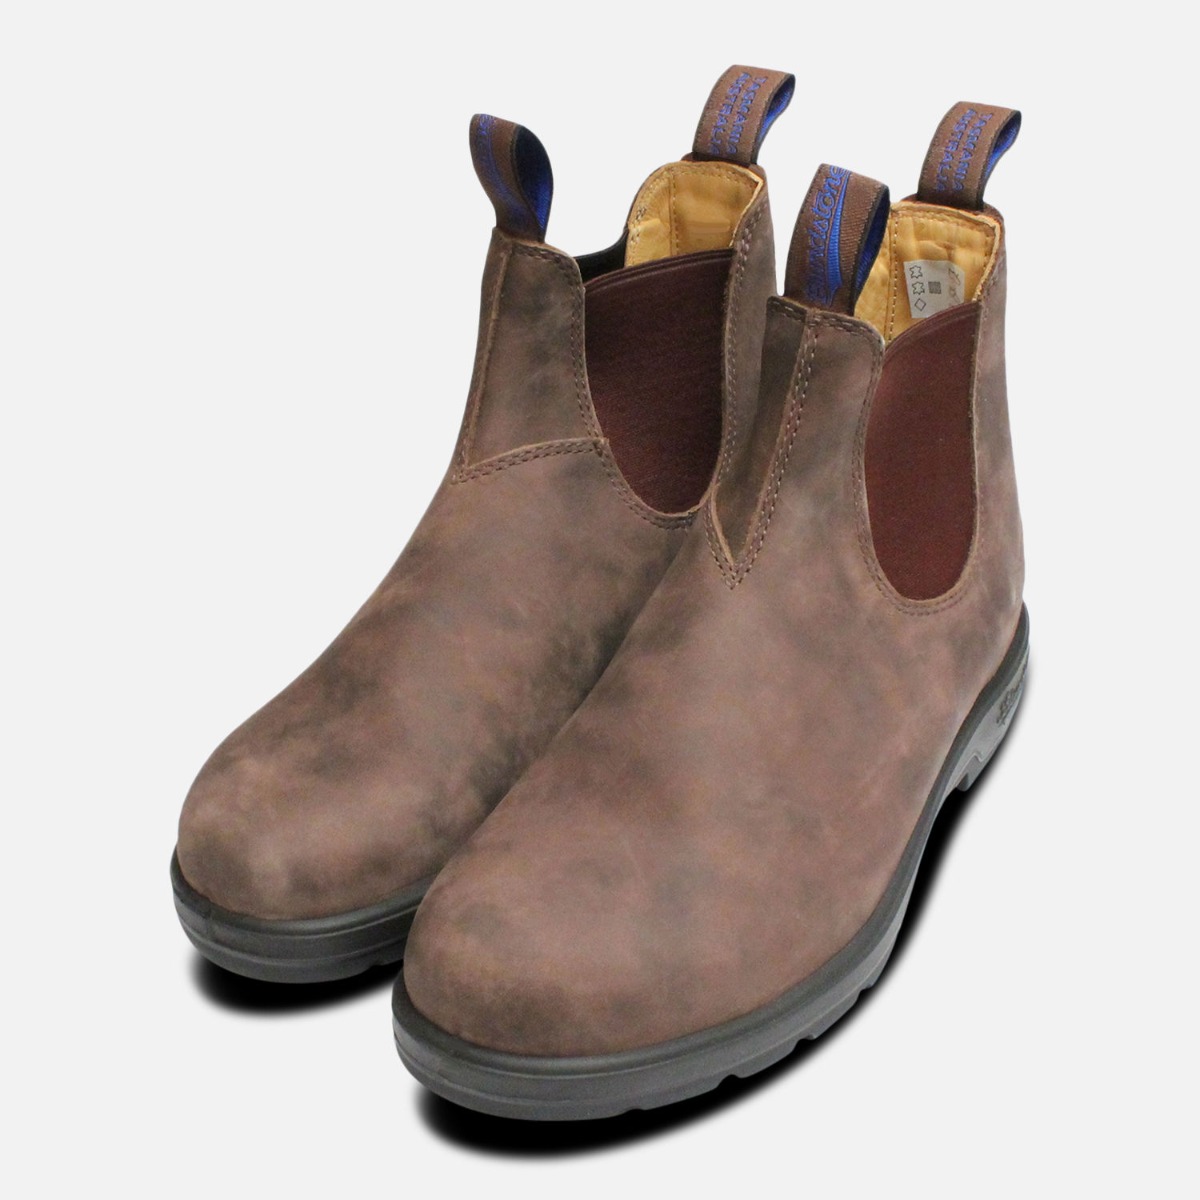 blundstone boots online